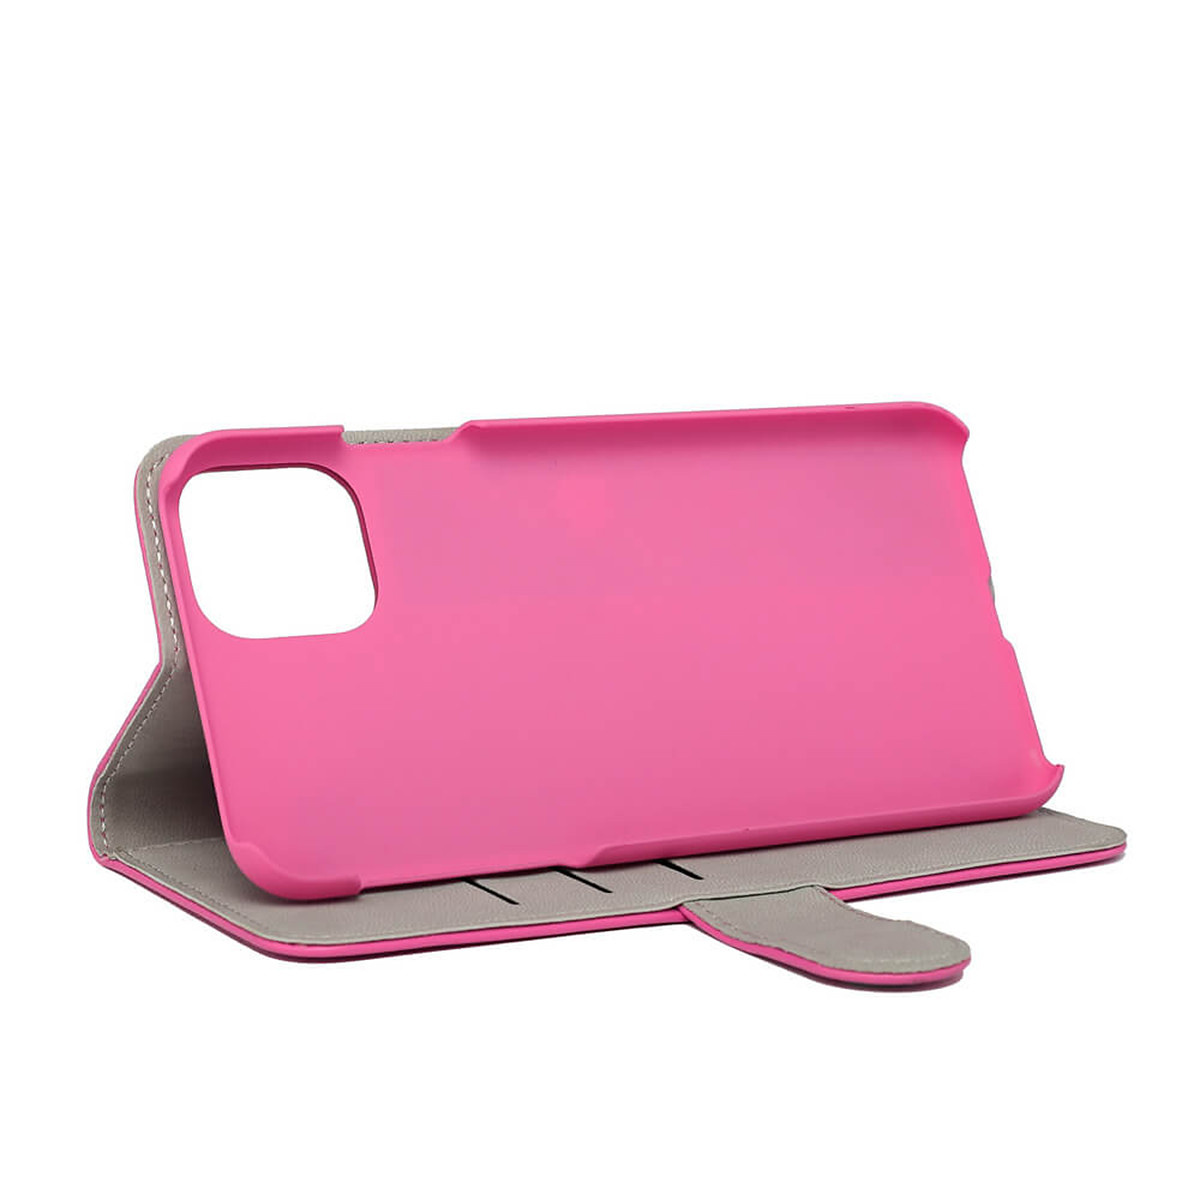 Gear plånboksväska, iPhone 11 Pro Max, rosa